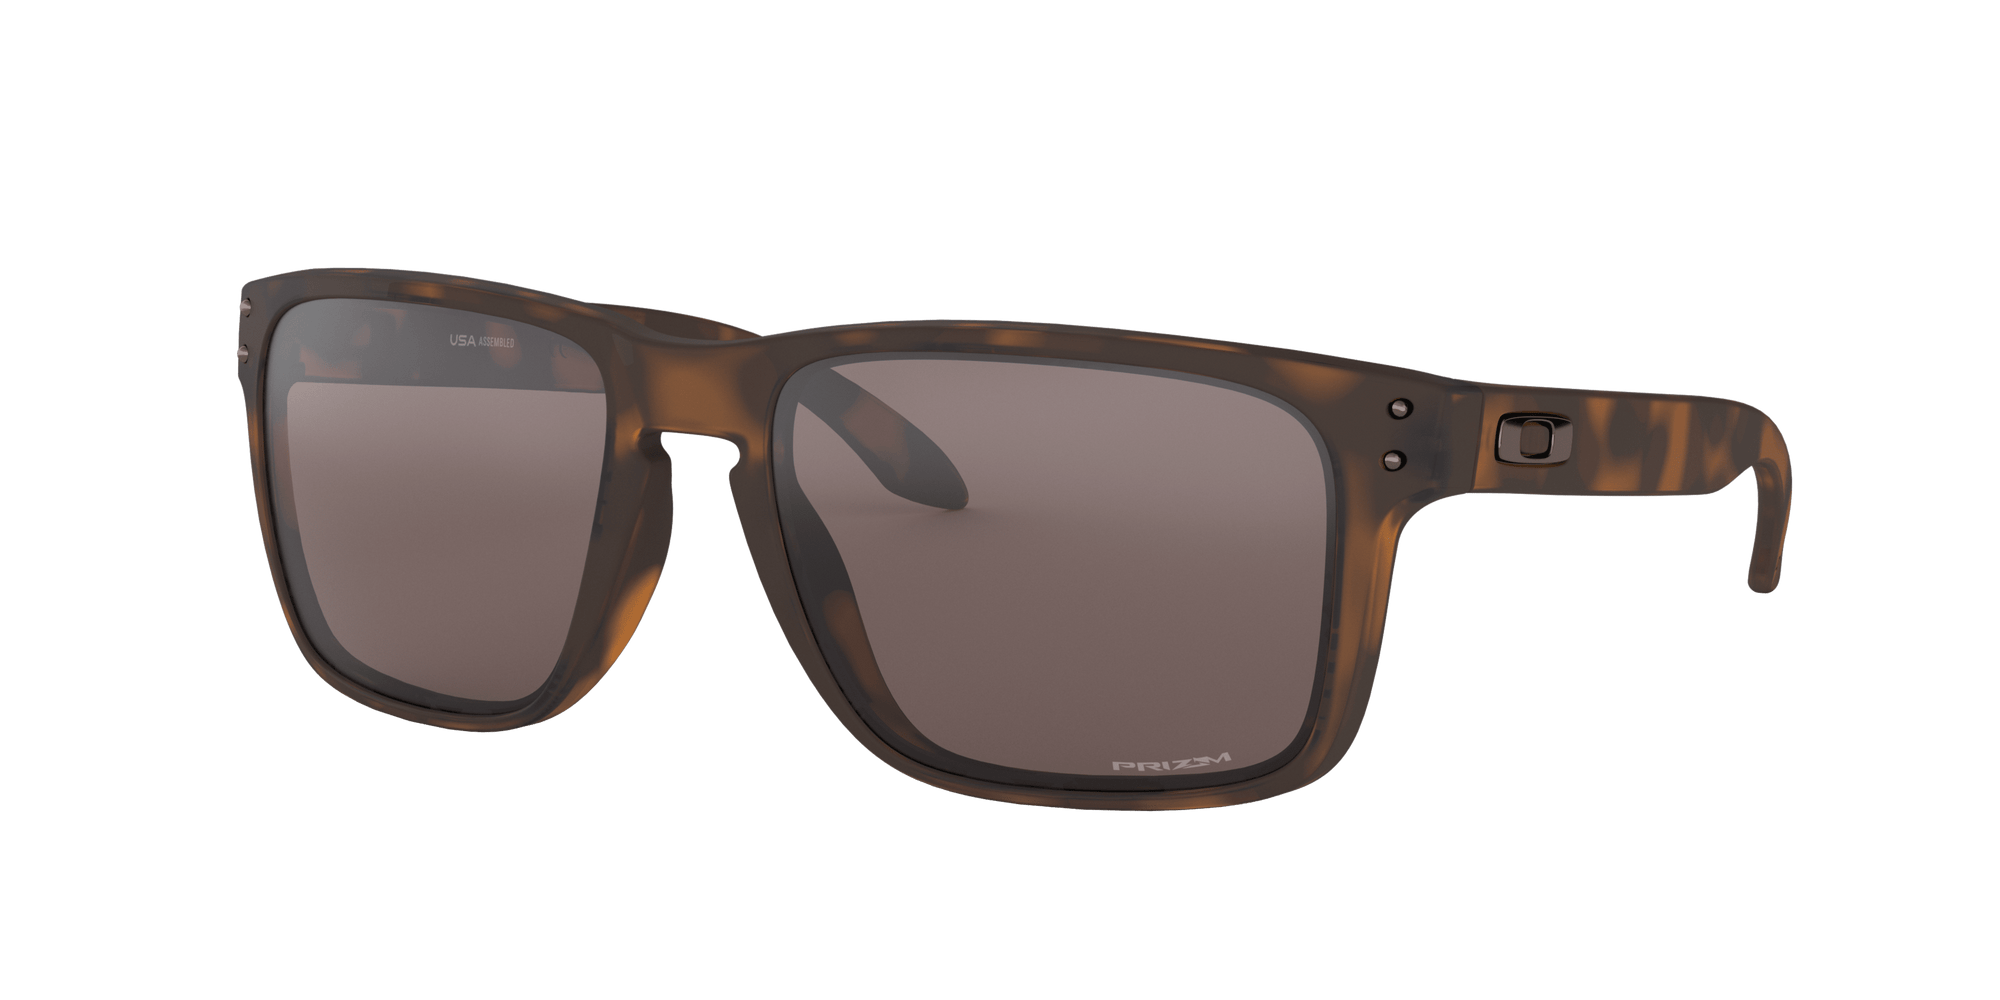 OAKLEY Holbrook XL Matte Brown Tortoise - Prizm Black Sunglasses Sunglasses Oakley 